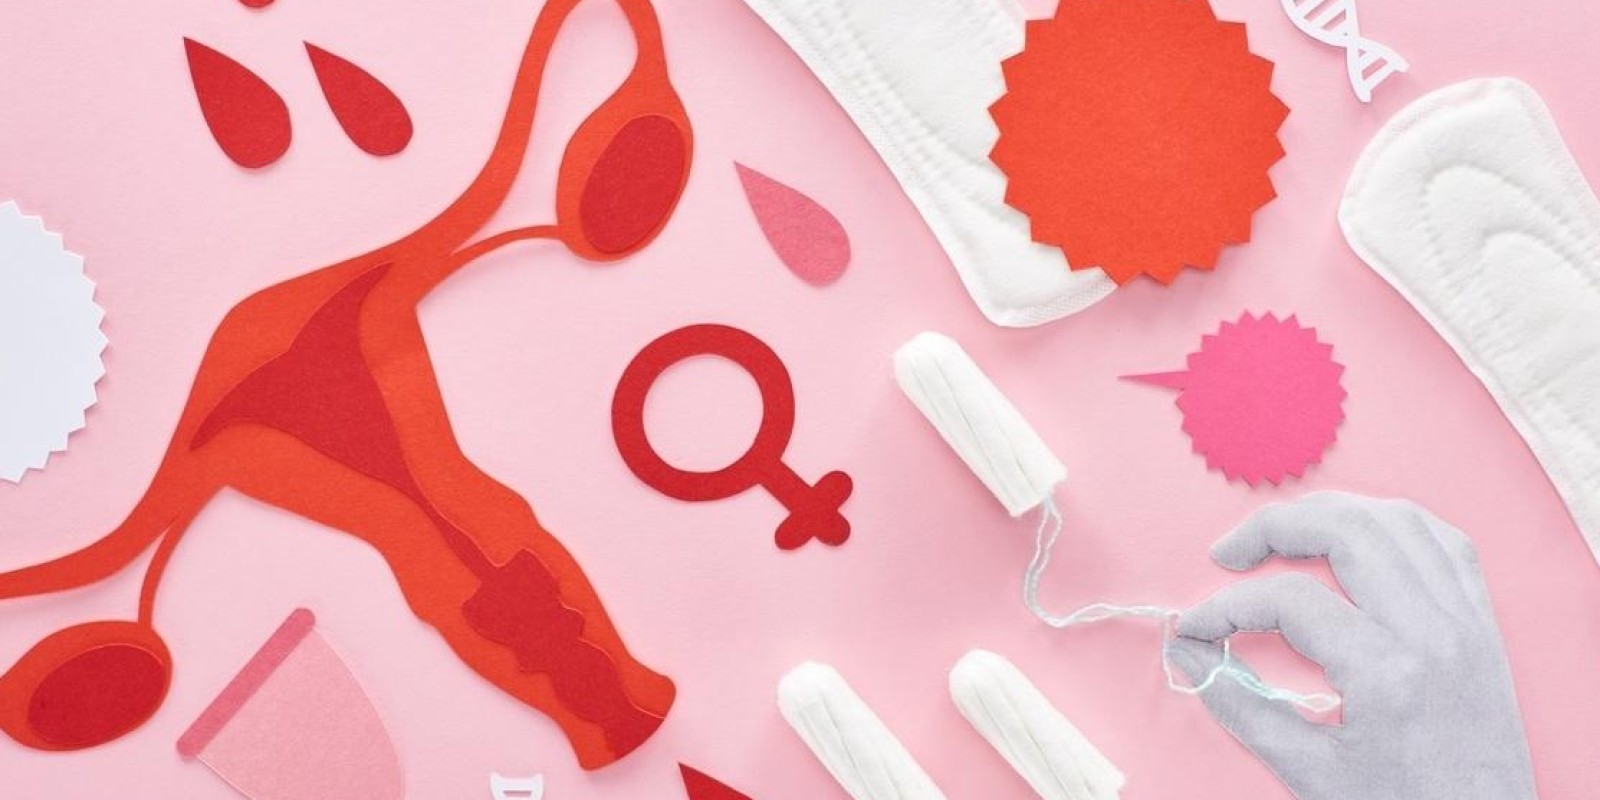 Uma solução Para a Pobreza Menstrual | Rafaella de Bona | TEDxBlumenauWomen